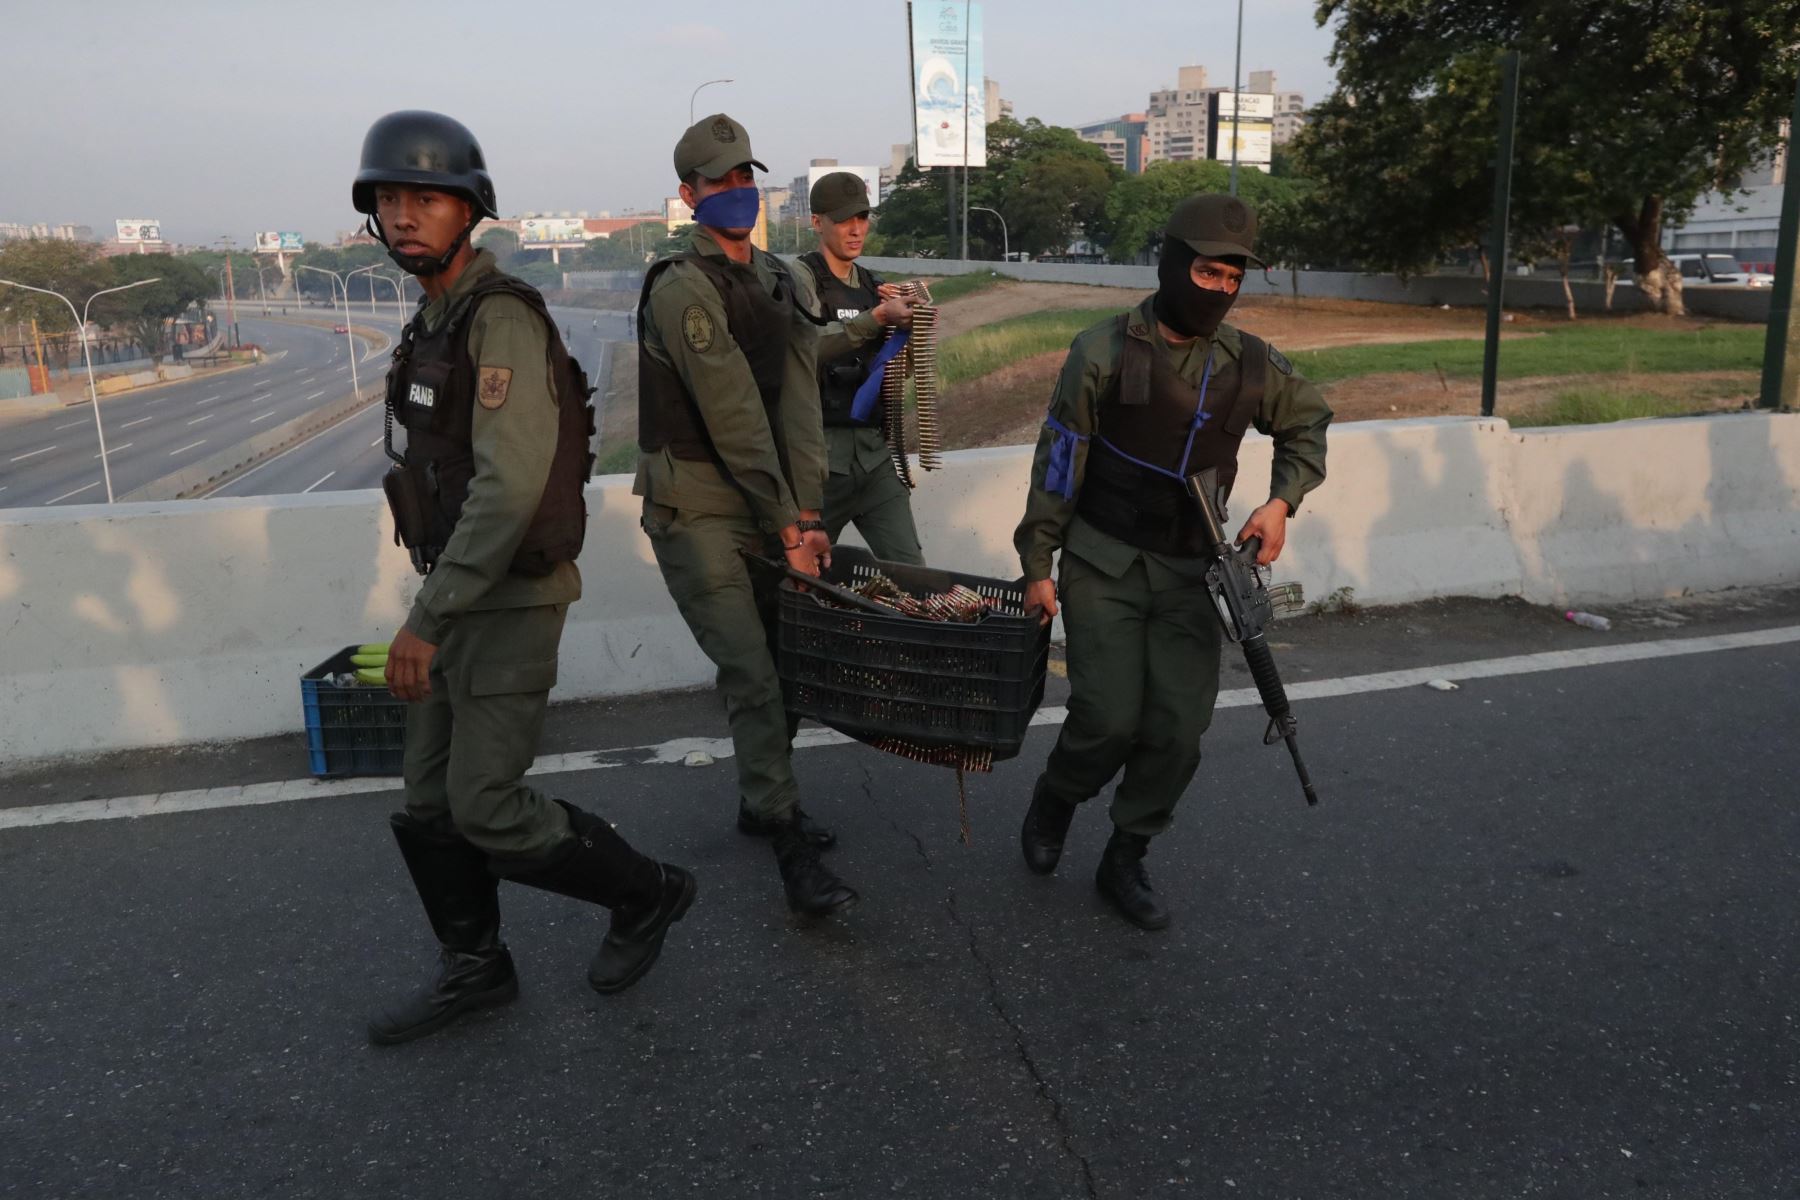 Una banda azul identifica a militares opositores a Maduro. Foto:EFE